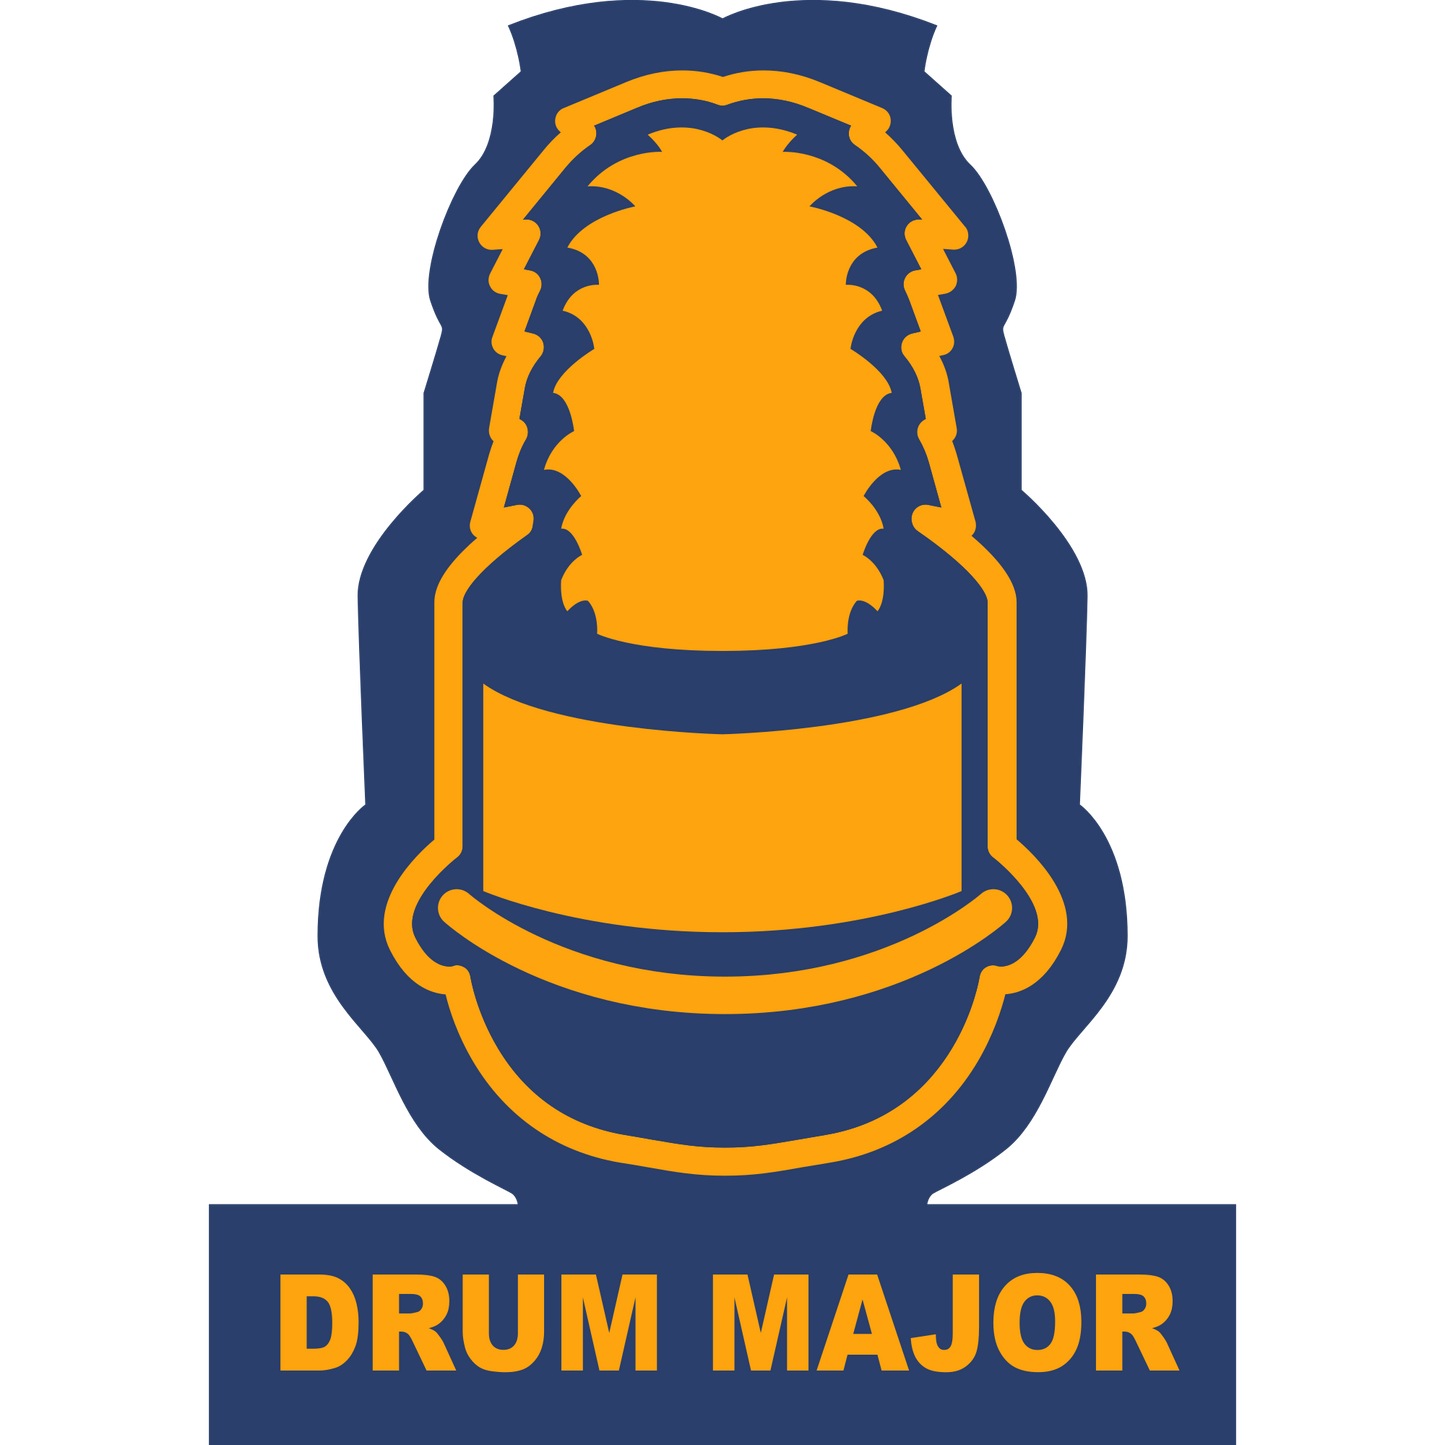 DRUMMJR - Drum Major Sleeve Patch